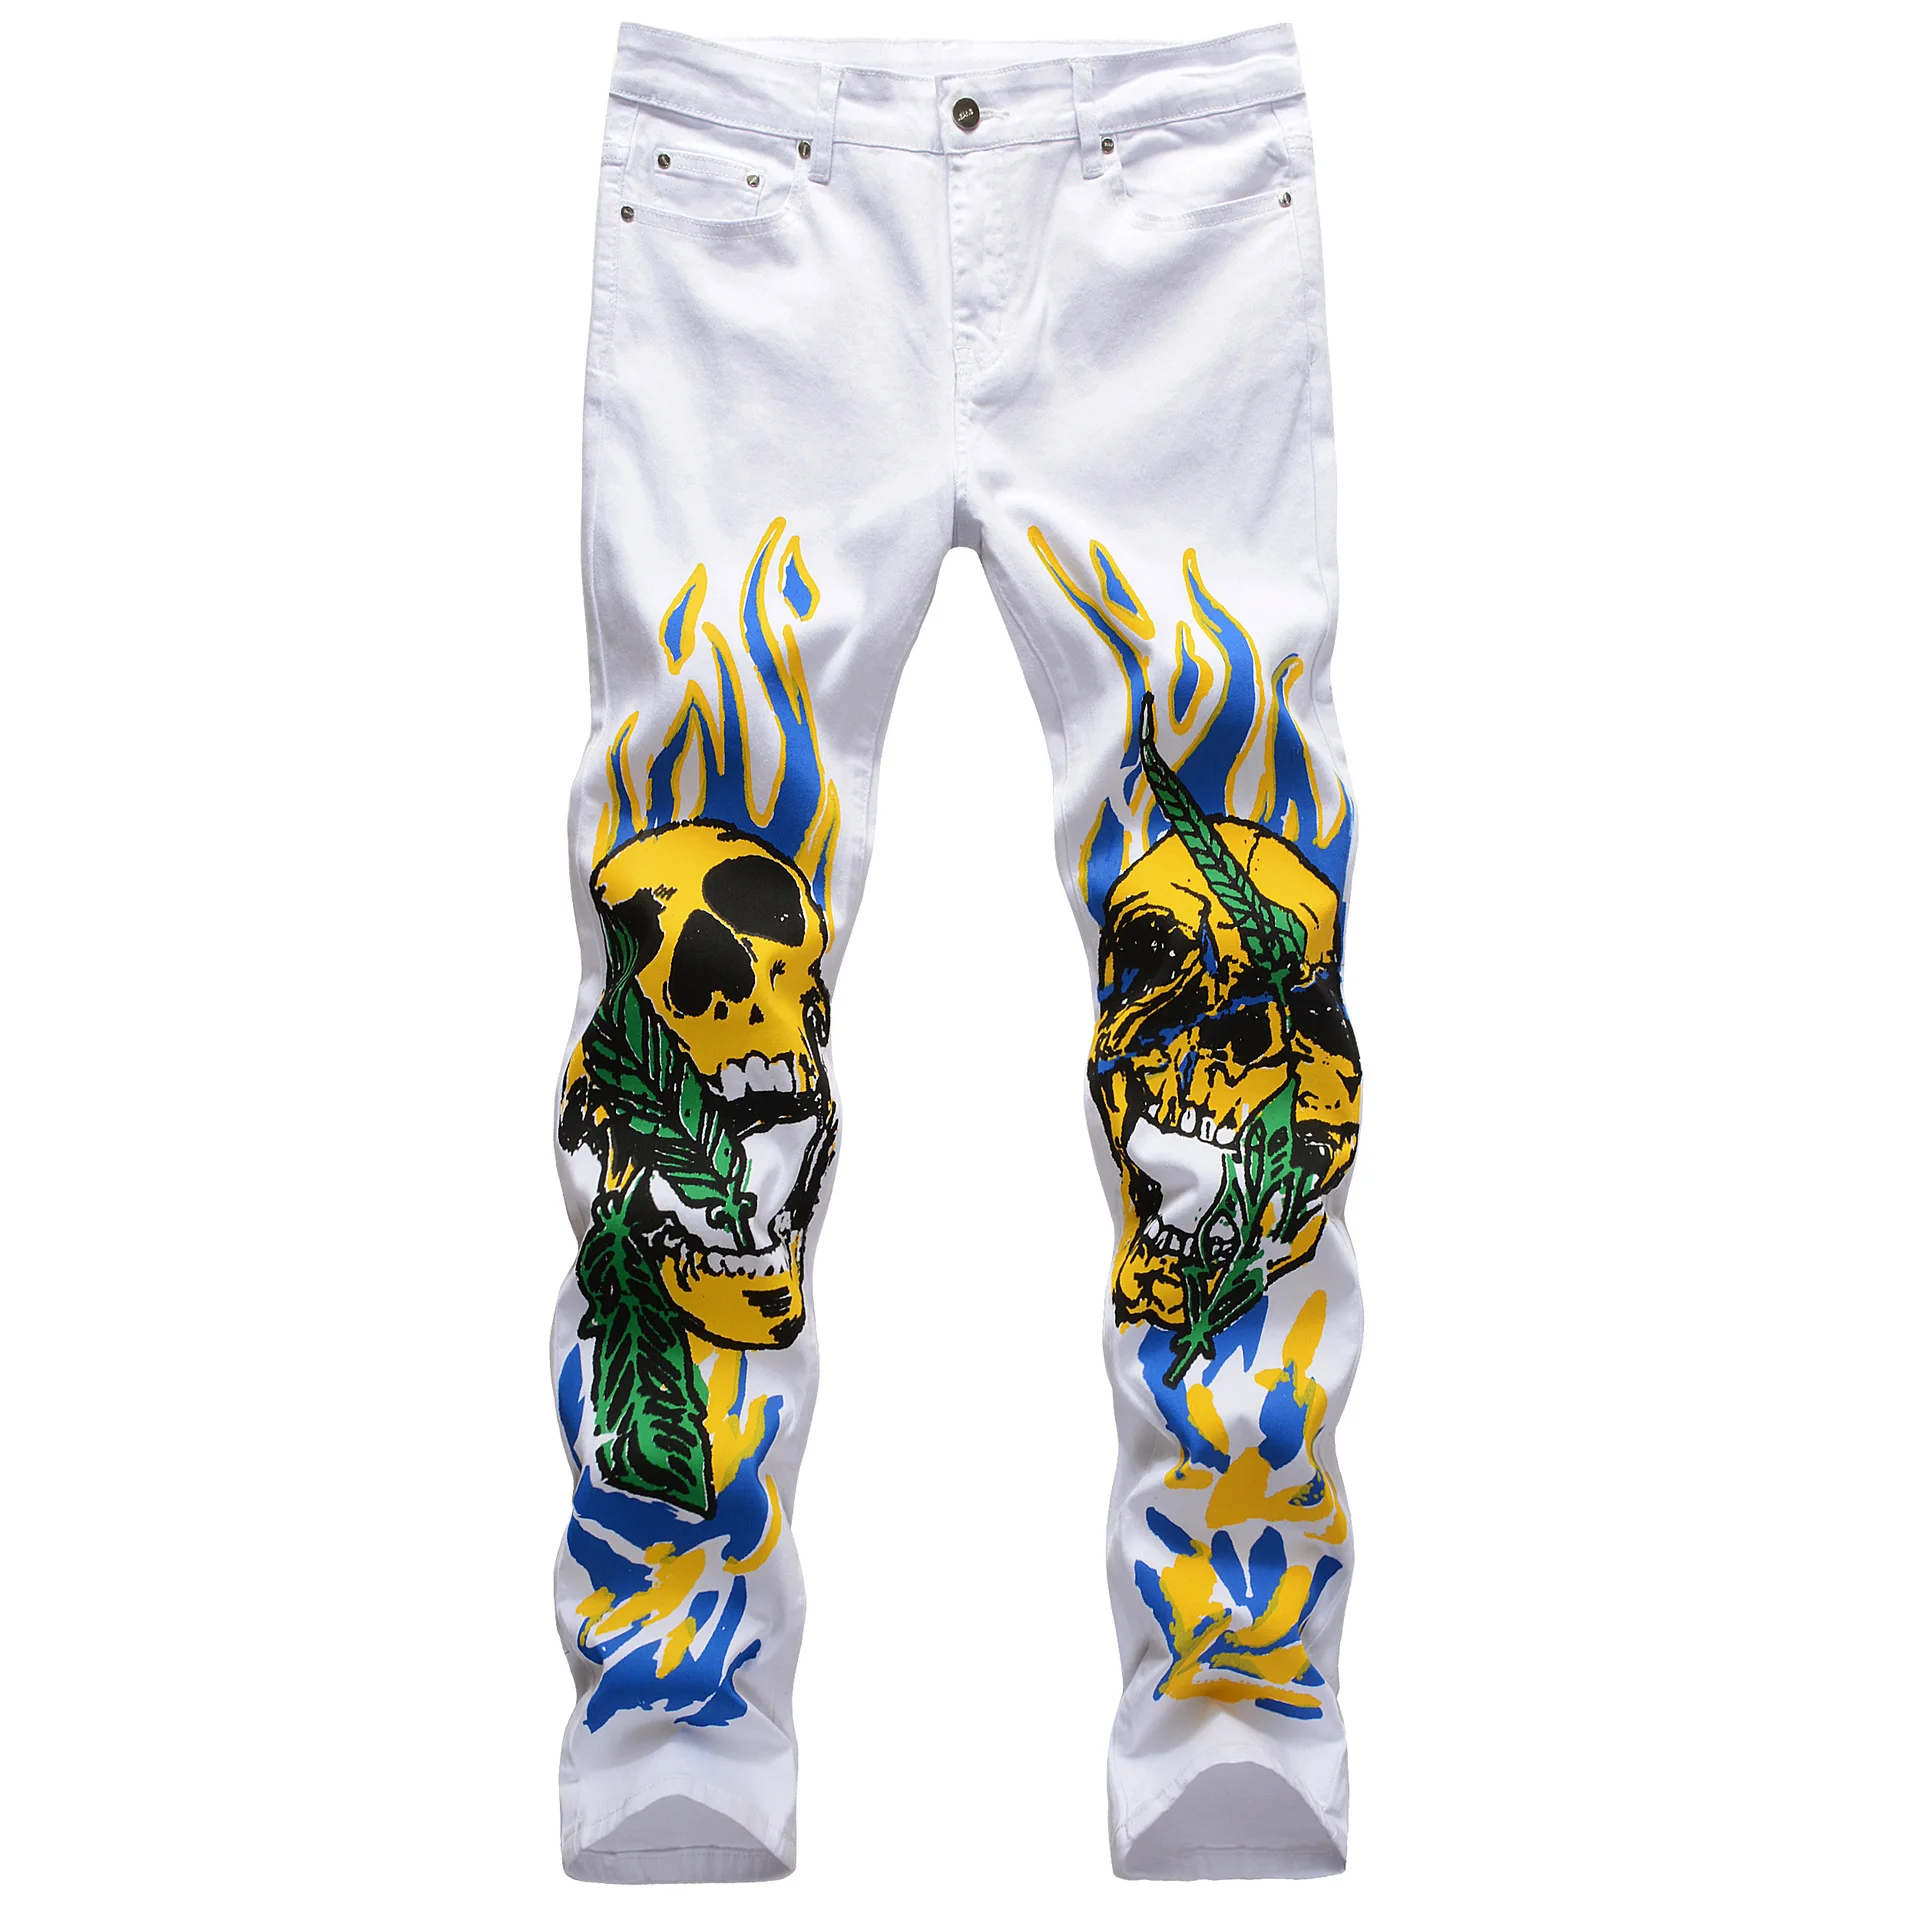 Jas Fashion Men's Jeans Stretch Slim Fit 3D Color Print Black White Trousers Flame Skull Graffiti Street Fashion Men Denim Pants